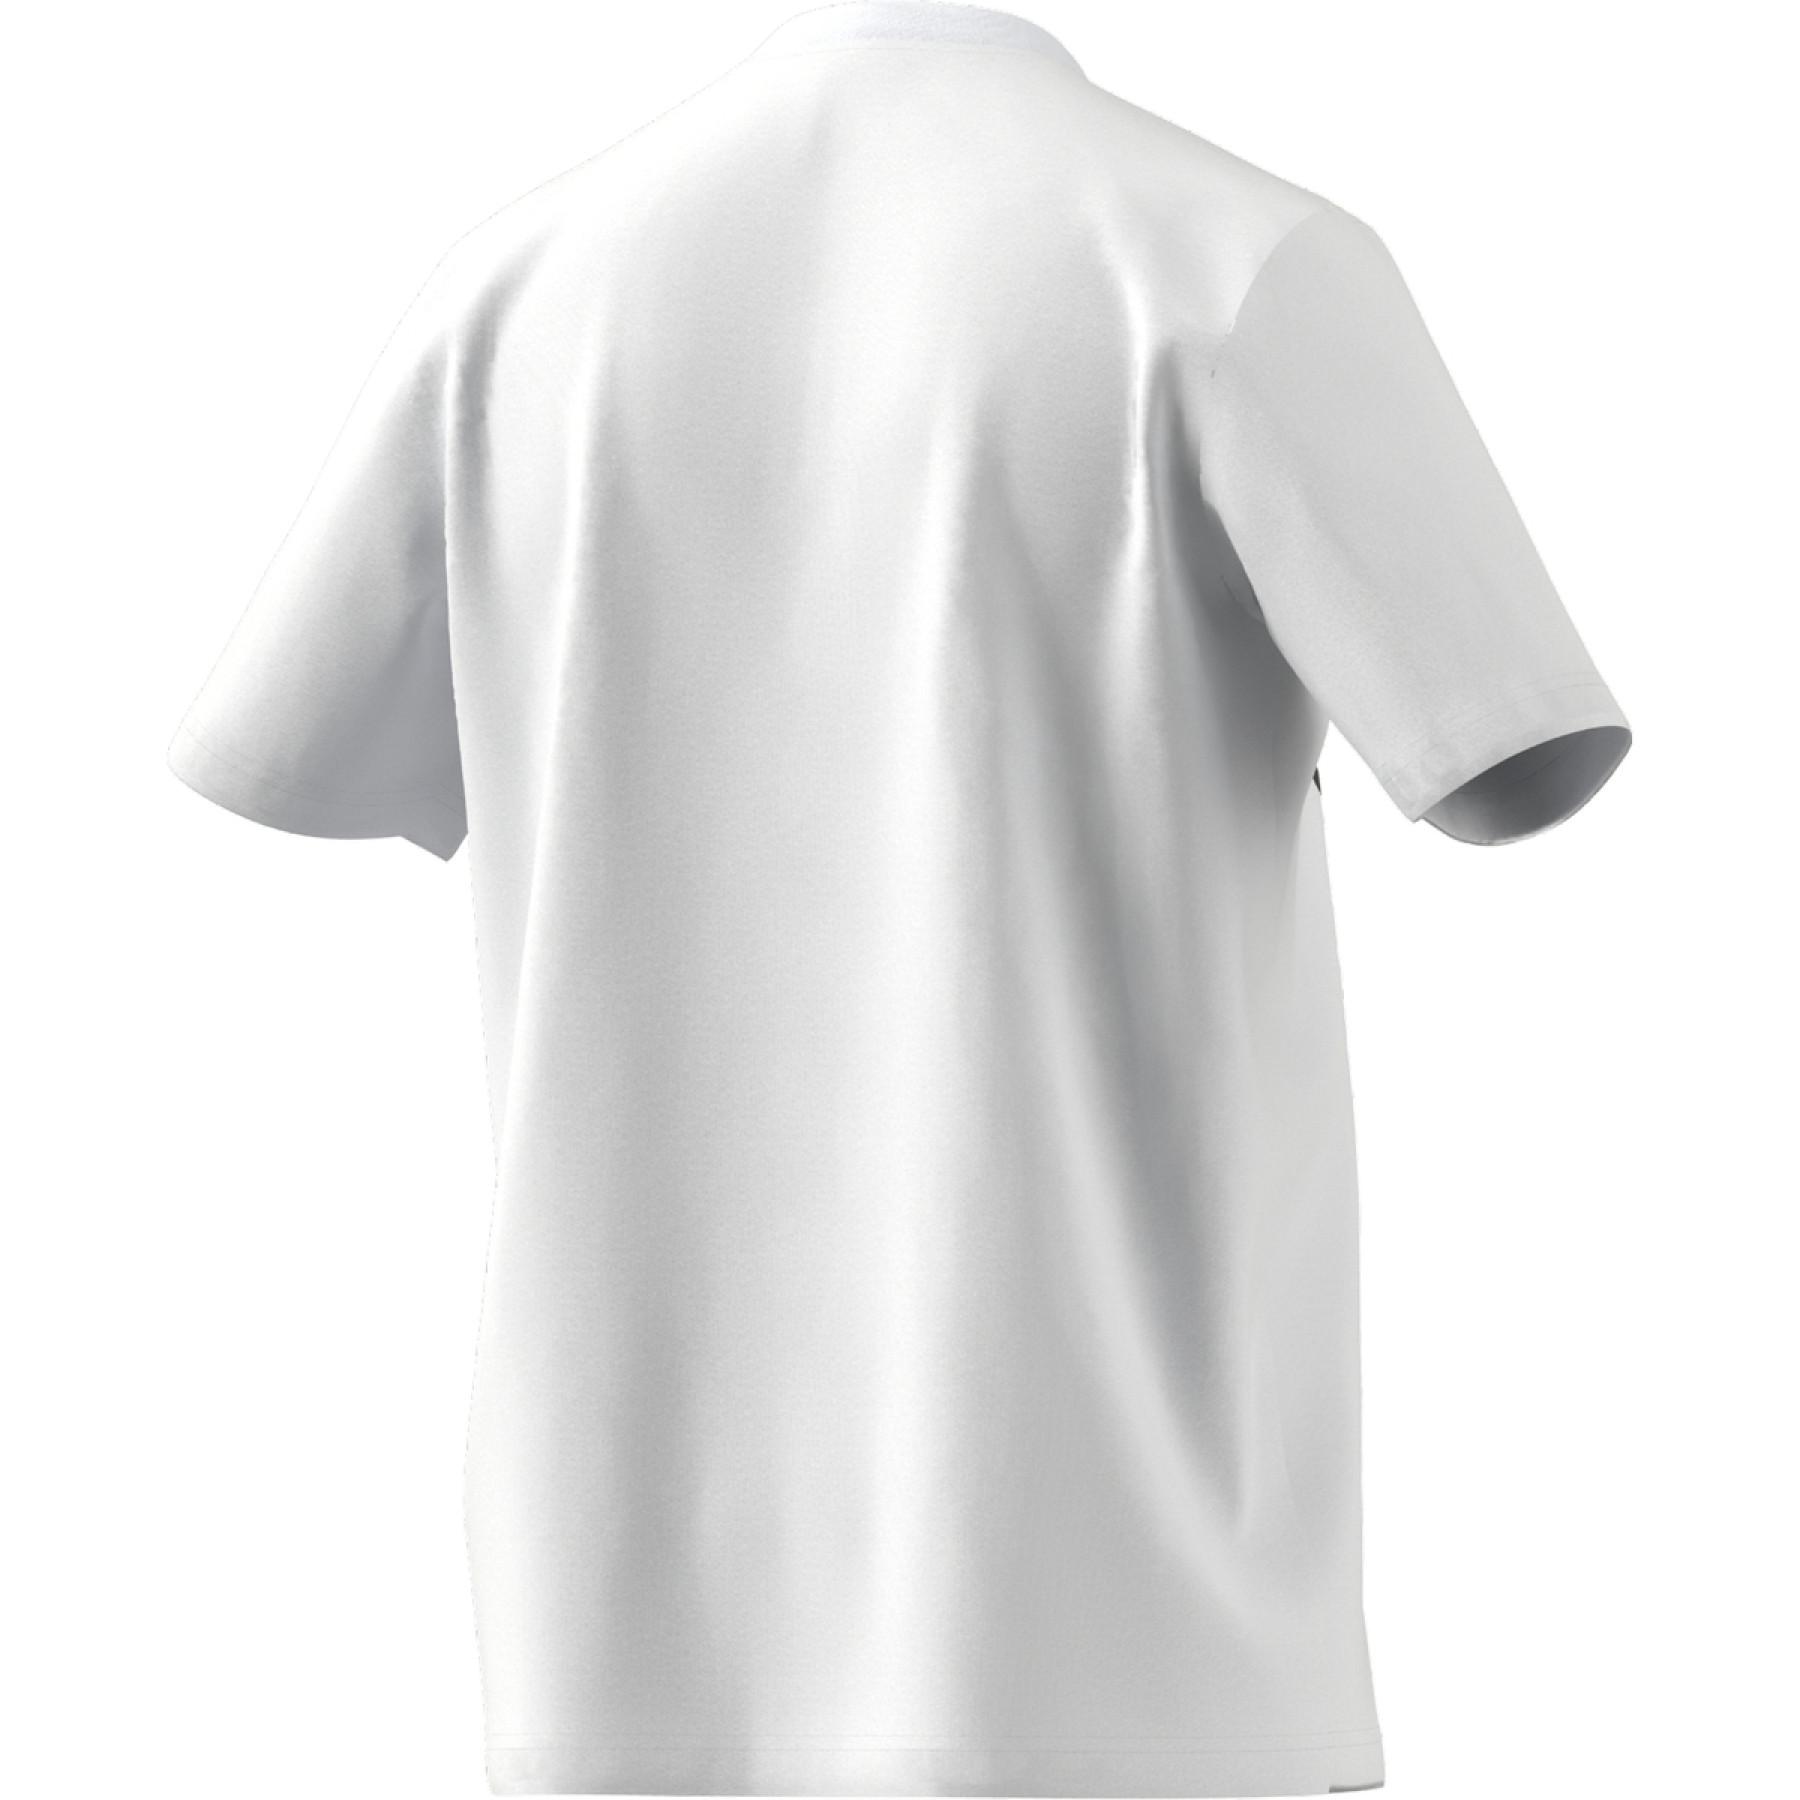 T-shirt adidas Essentials Big Logo